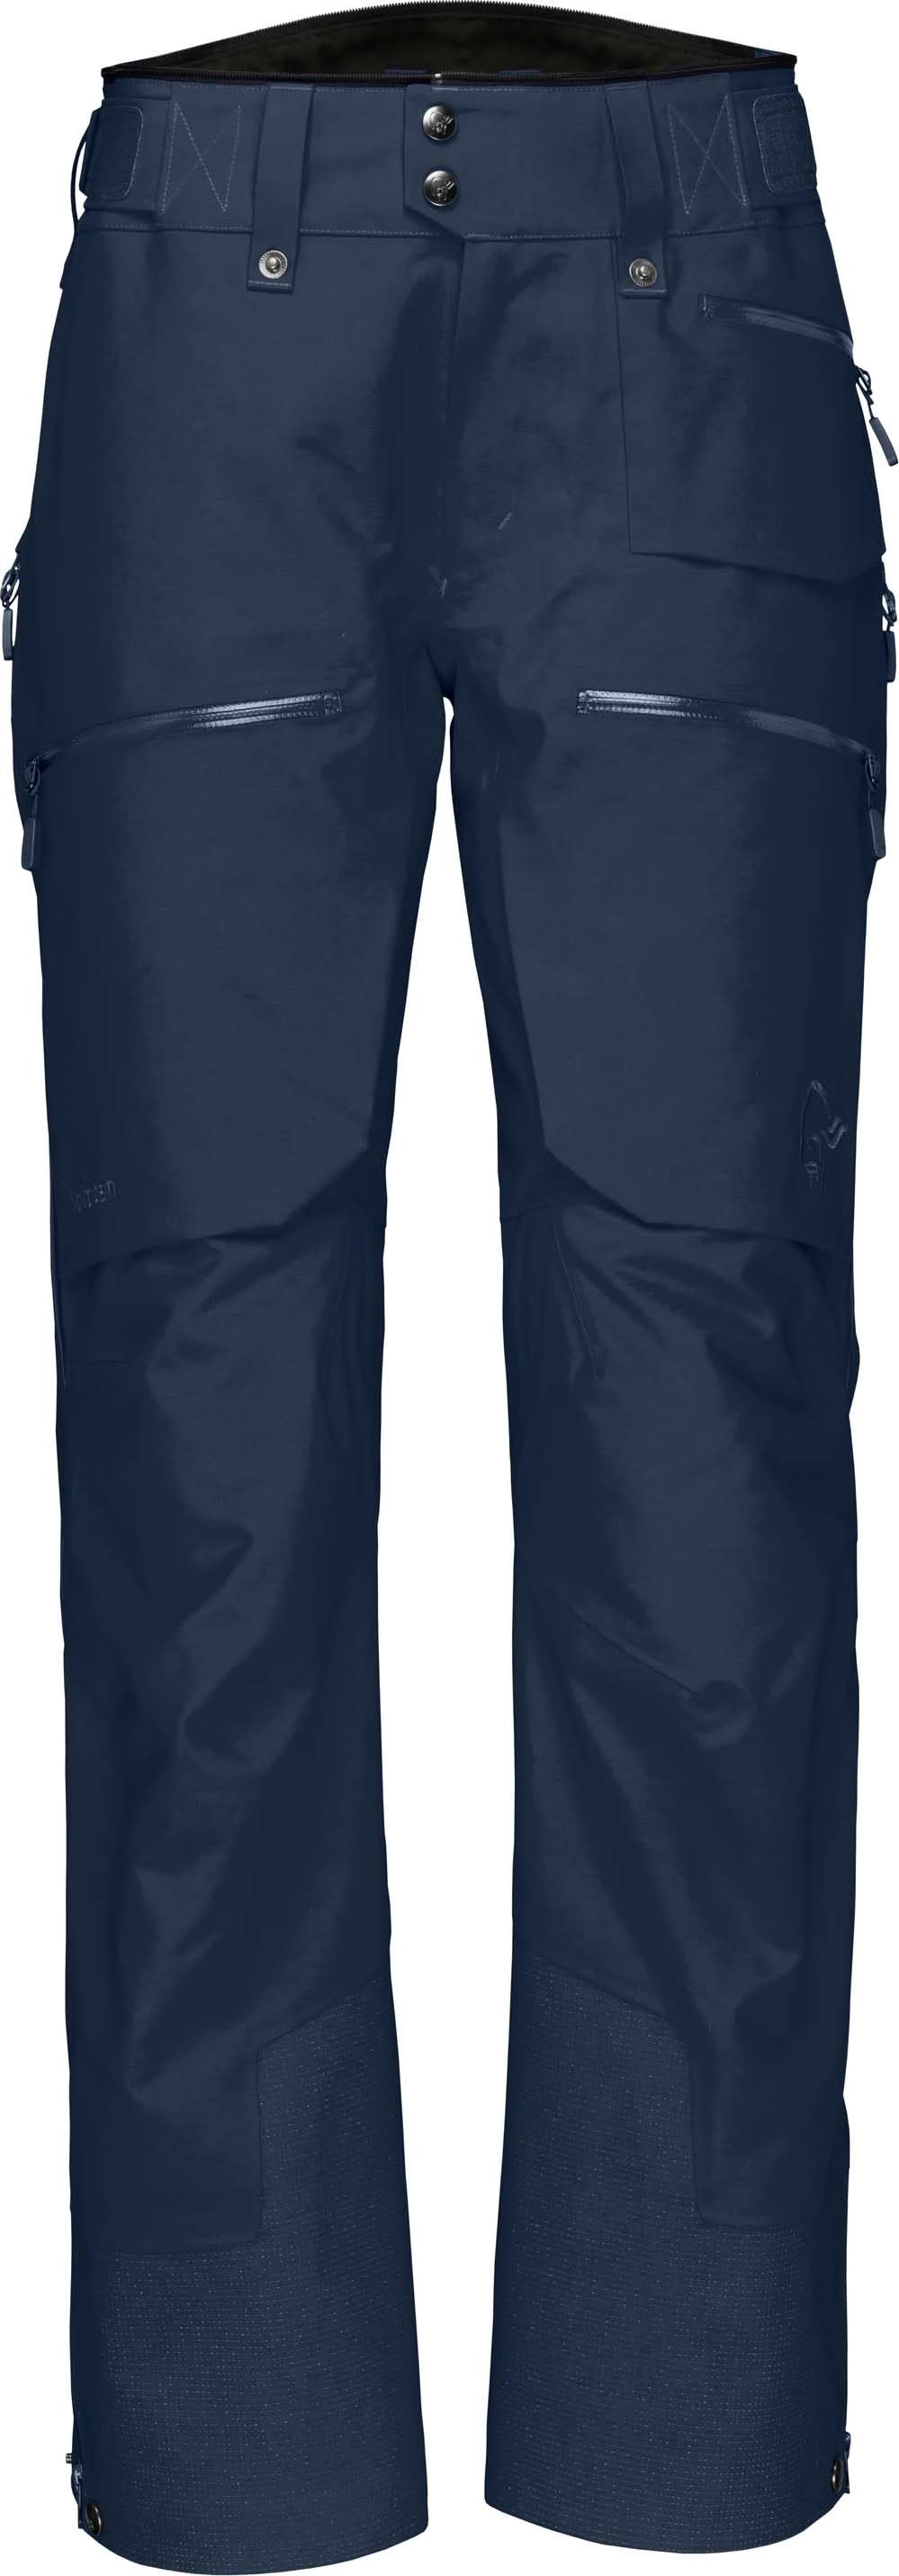 Women's Lofoten GORE-TEX Pro Pants Indigo Night